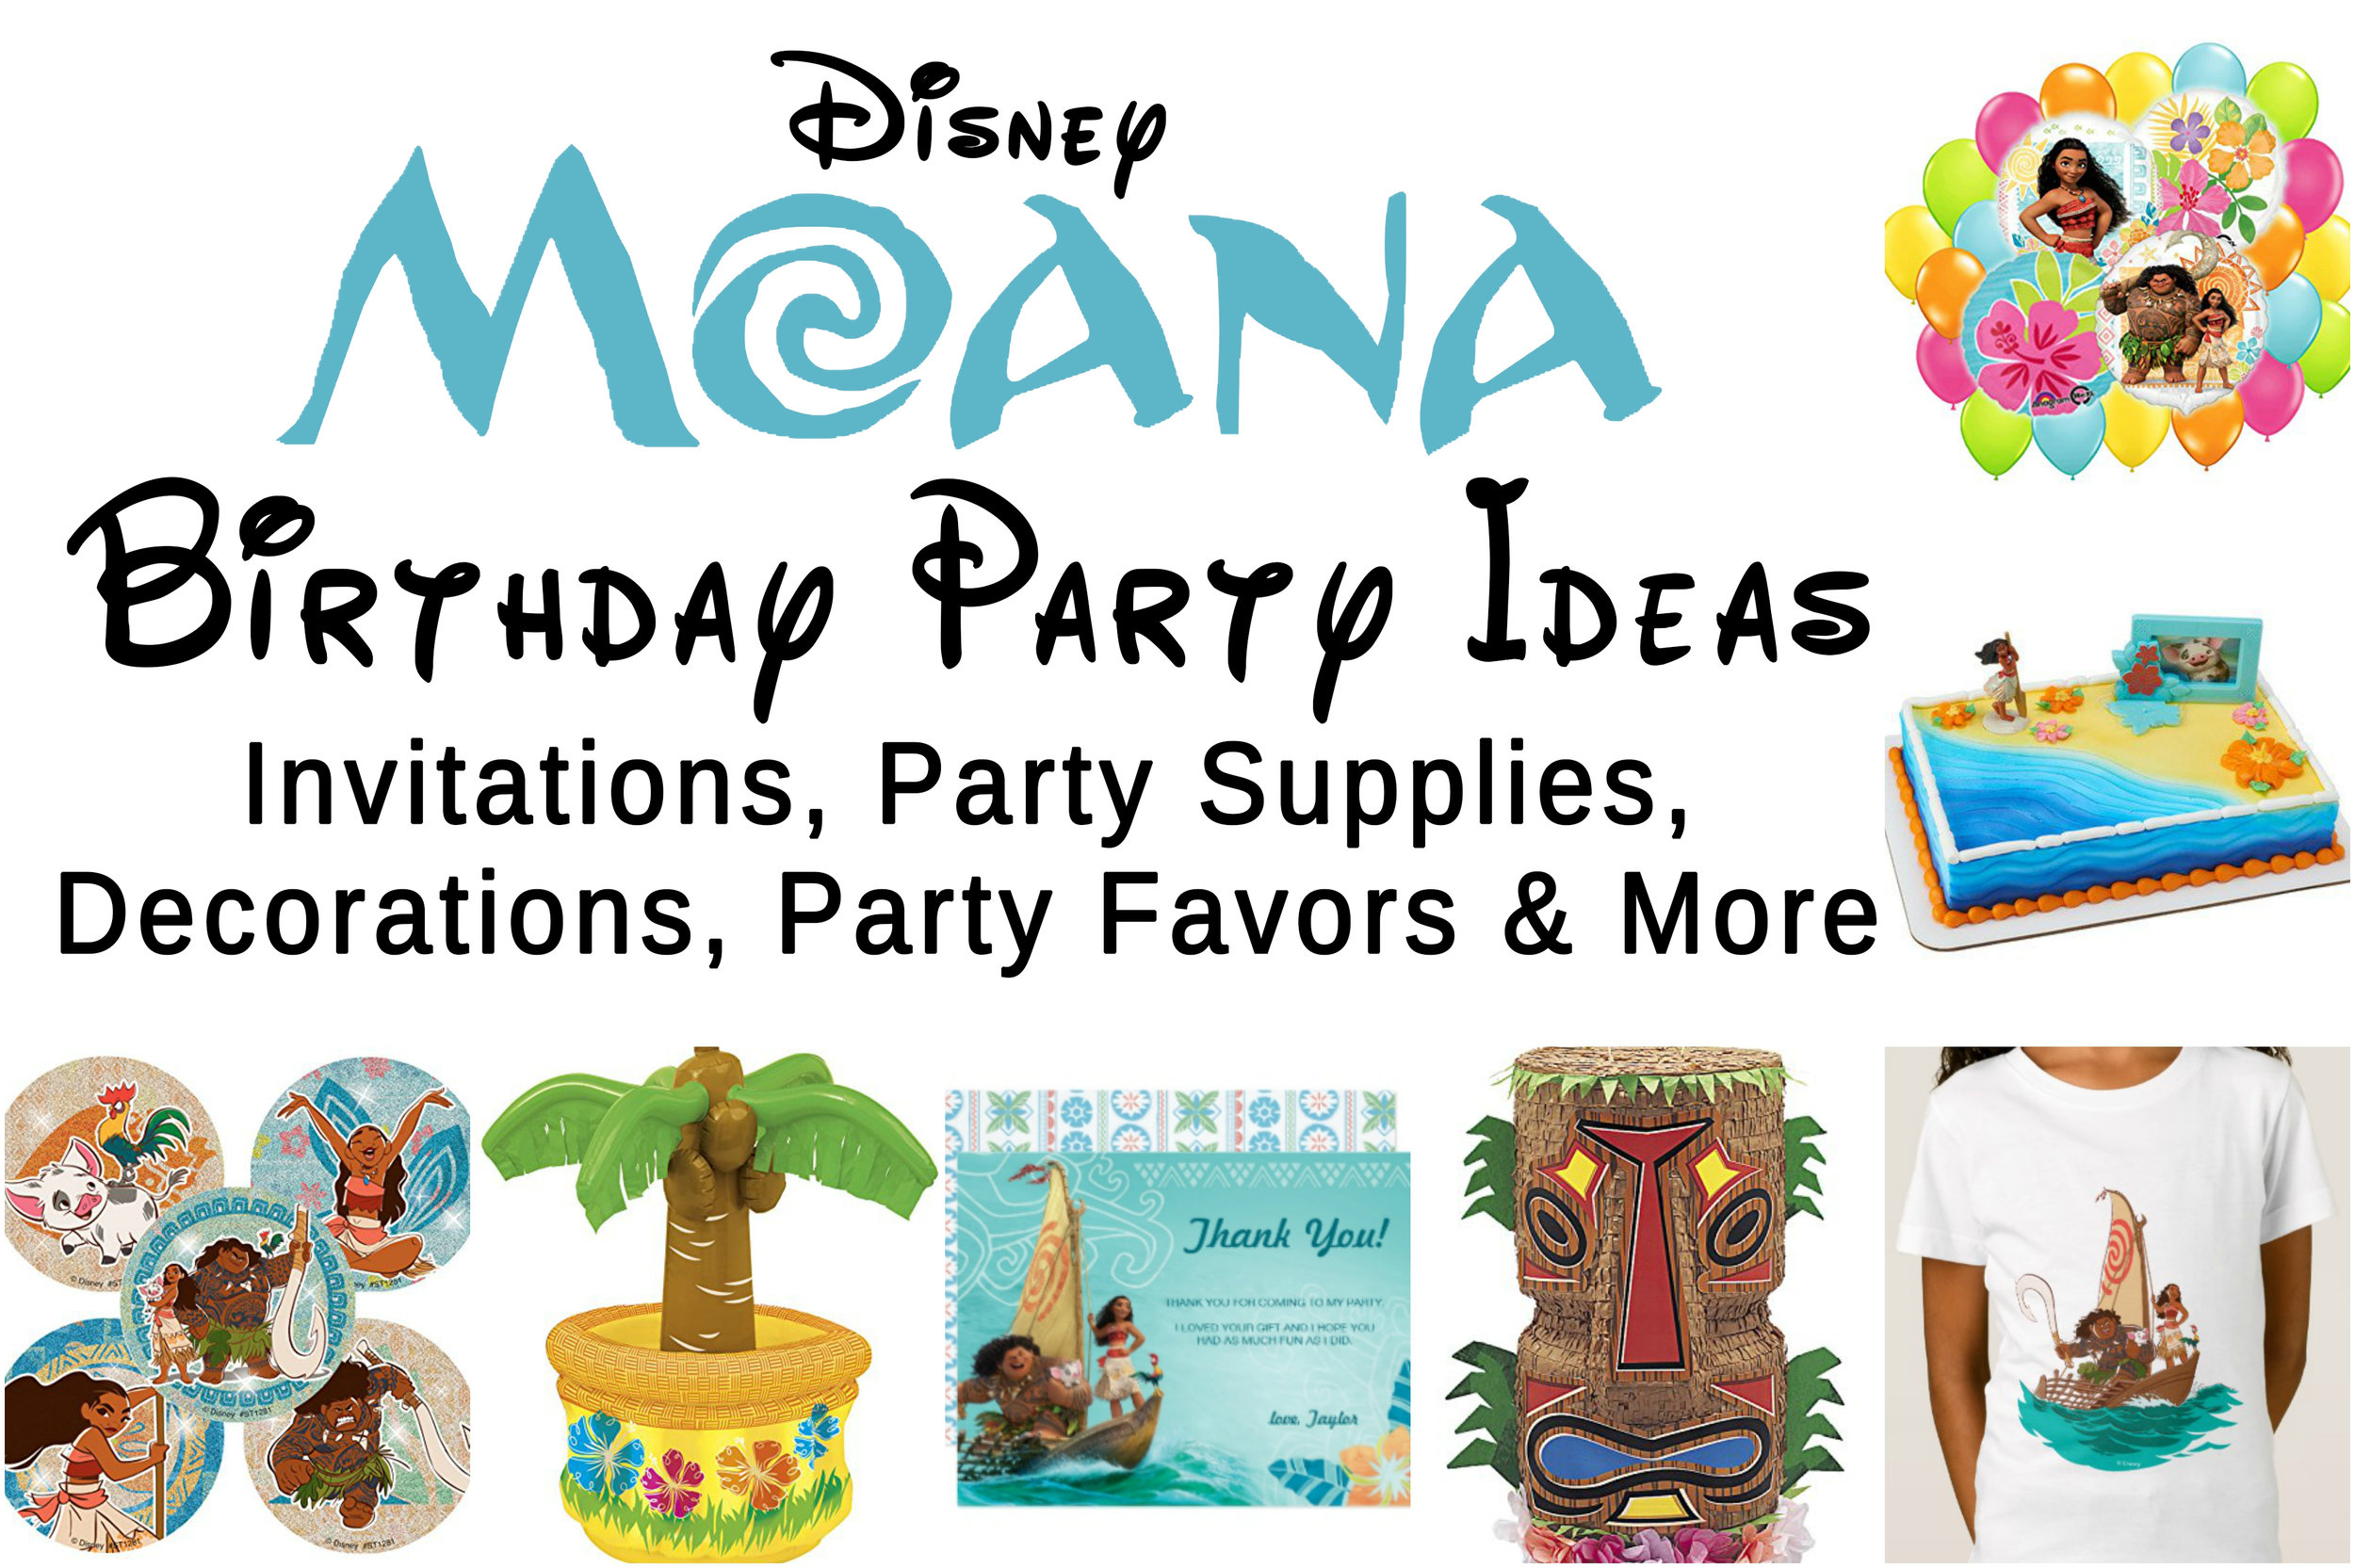 https://images.squarespace-cdn.com/content/v1/58293474725e259c855e3648/1485208917394-3QEUJ0VDBC6A7T1IY0XQ/Disney+Moana+Birthday+Party+Ideas